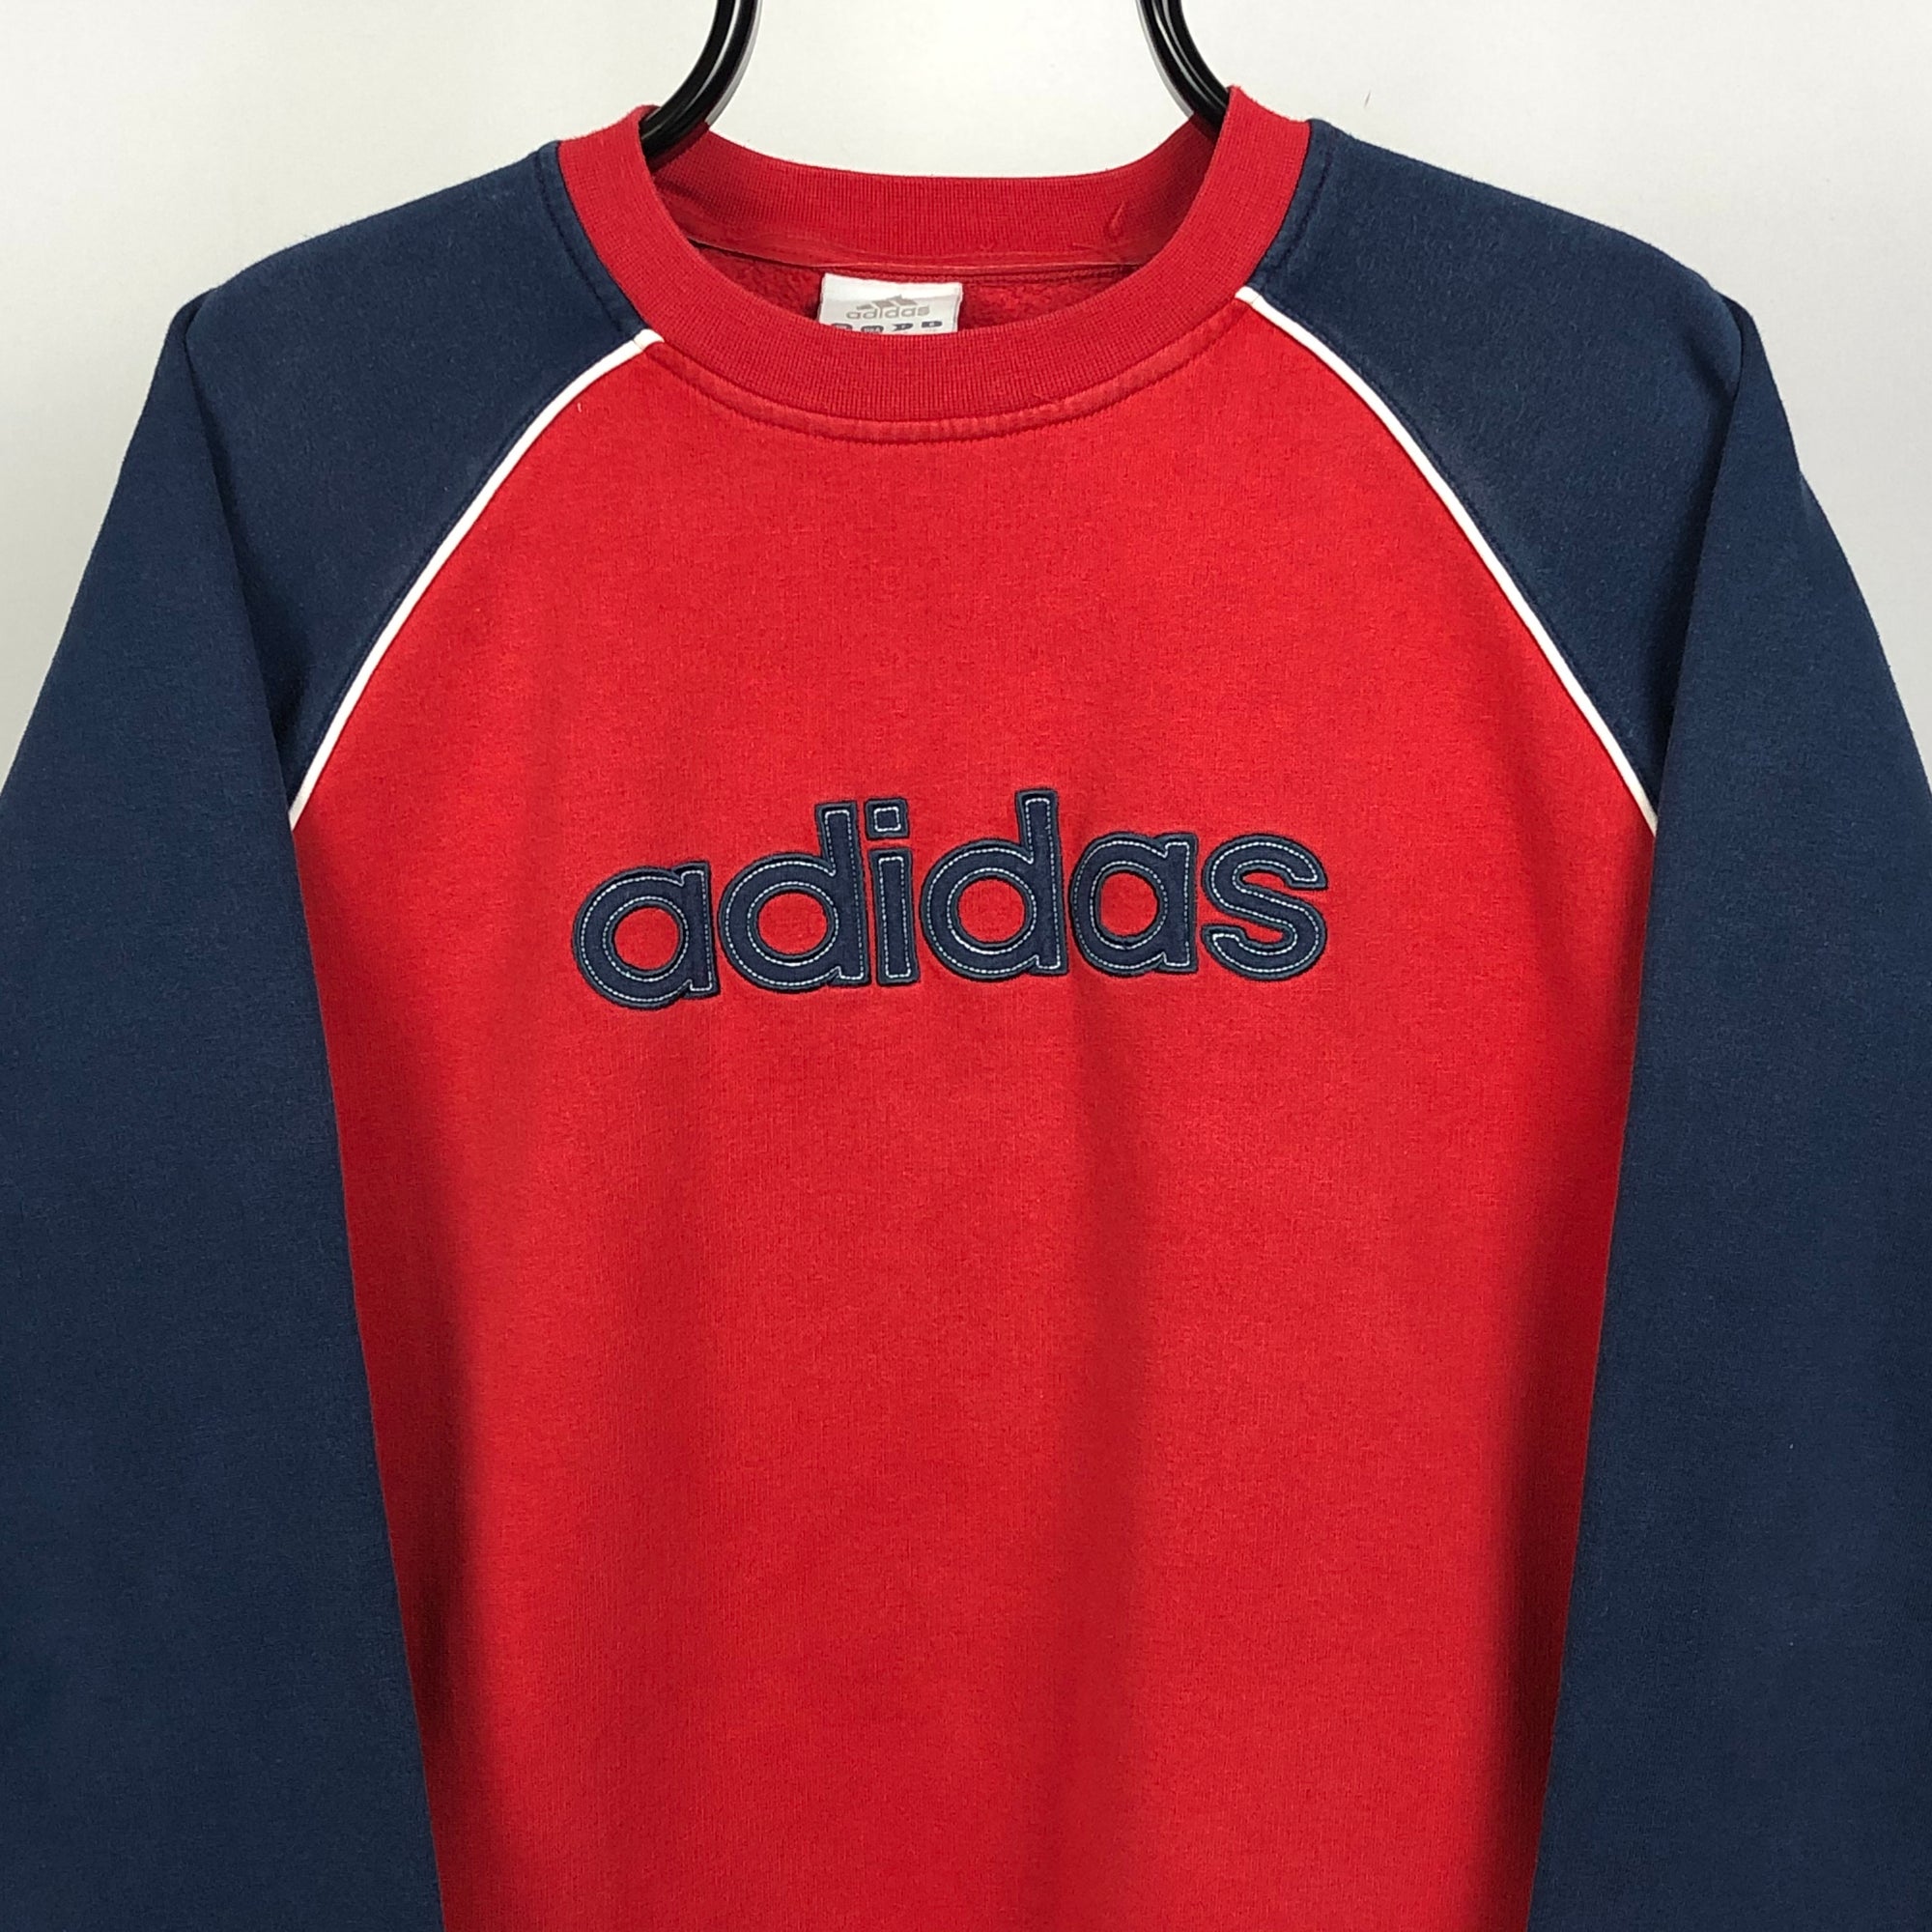 Vintage Adidas Spellout Sweatshirt in Red/Navy - Men's Medium/Women's Large